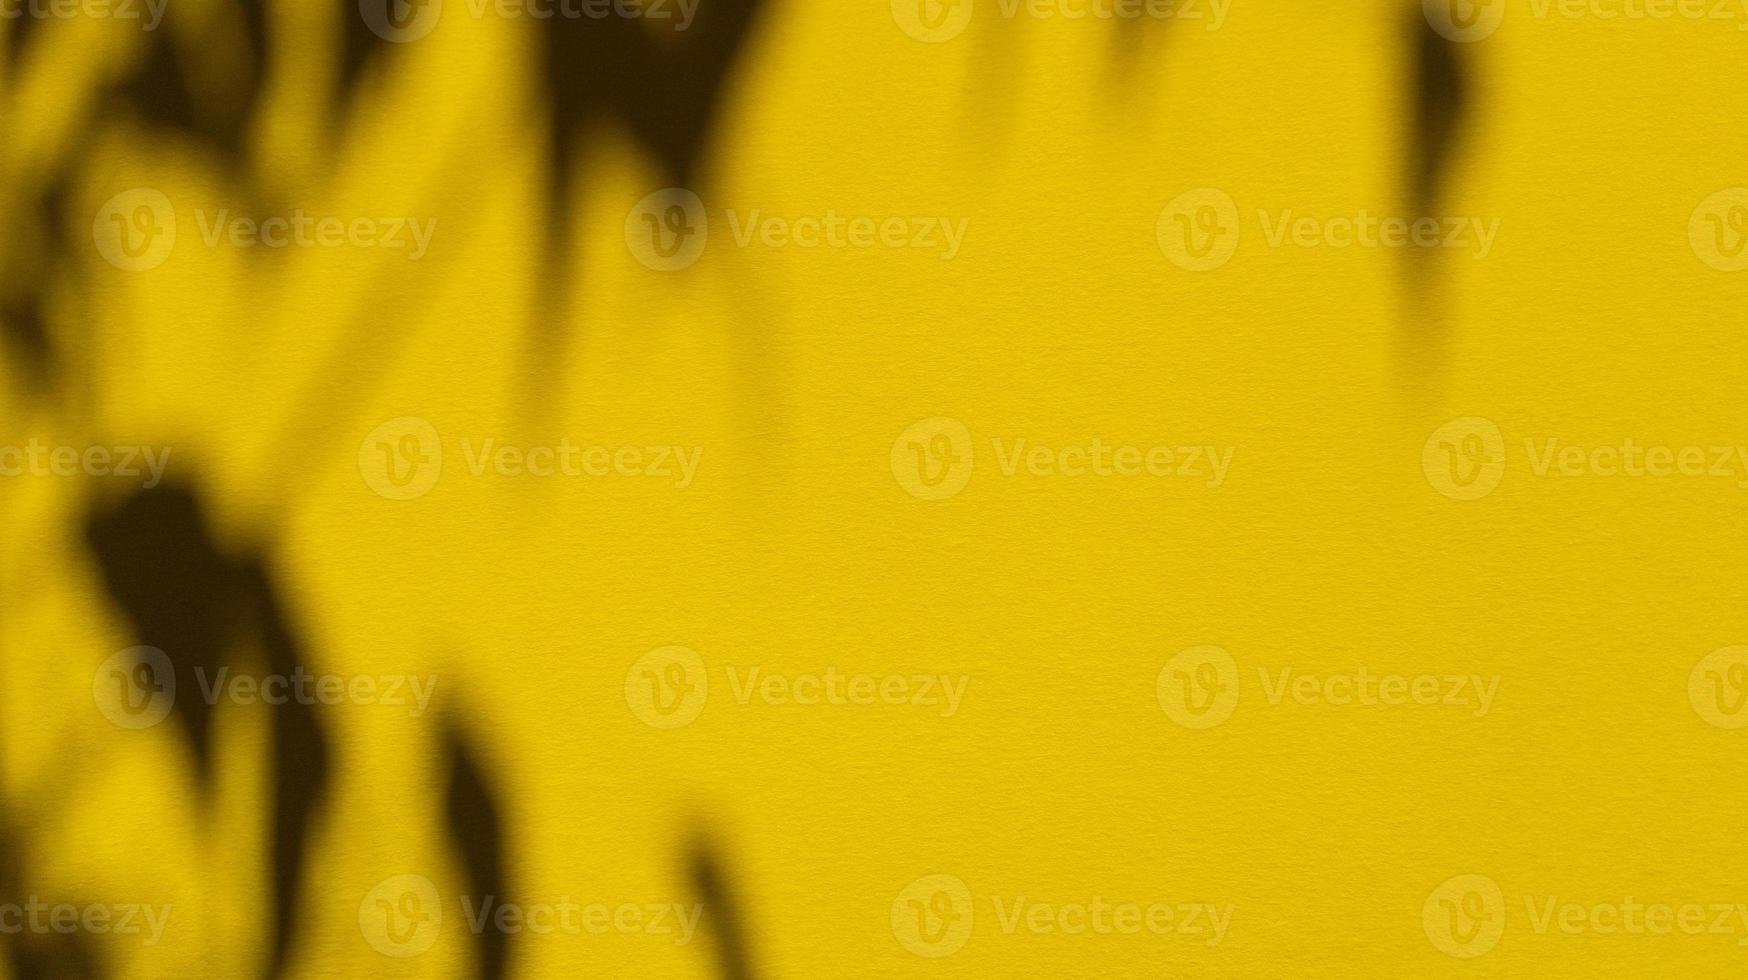 deixa sombras em papel amarelo pastel abstrato fotografia stock de backgorund foto